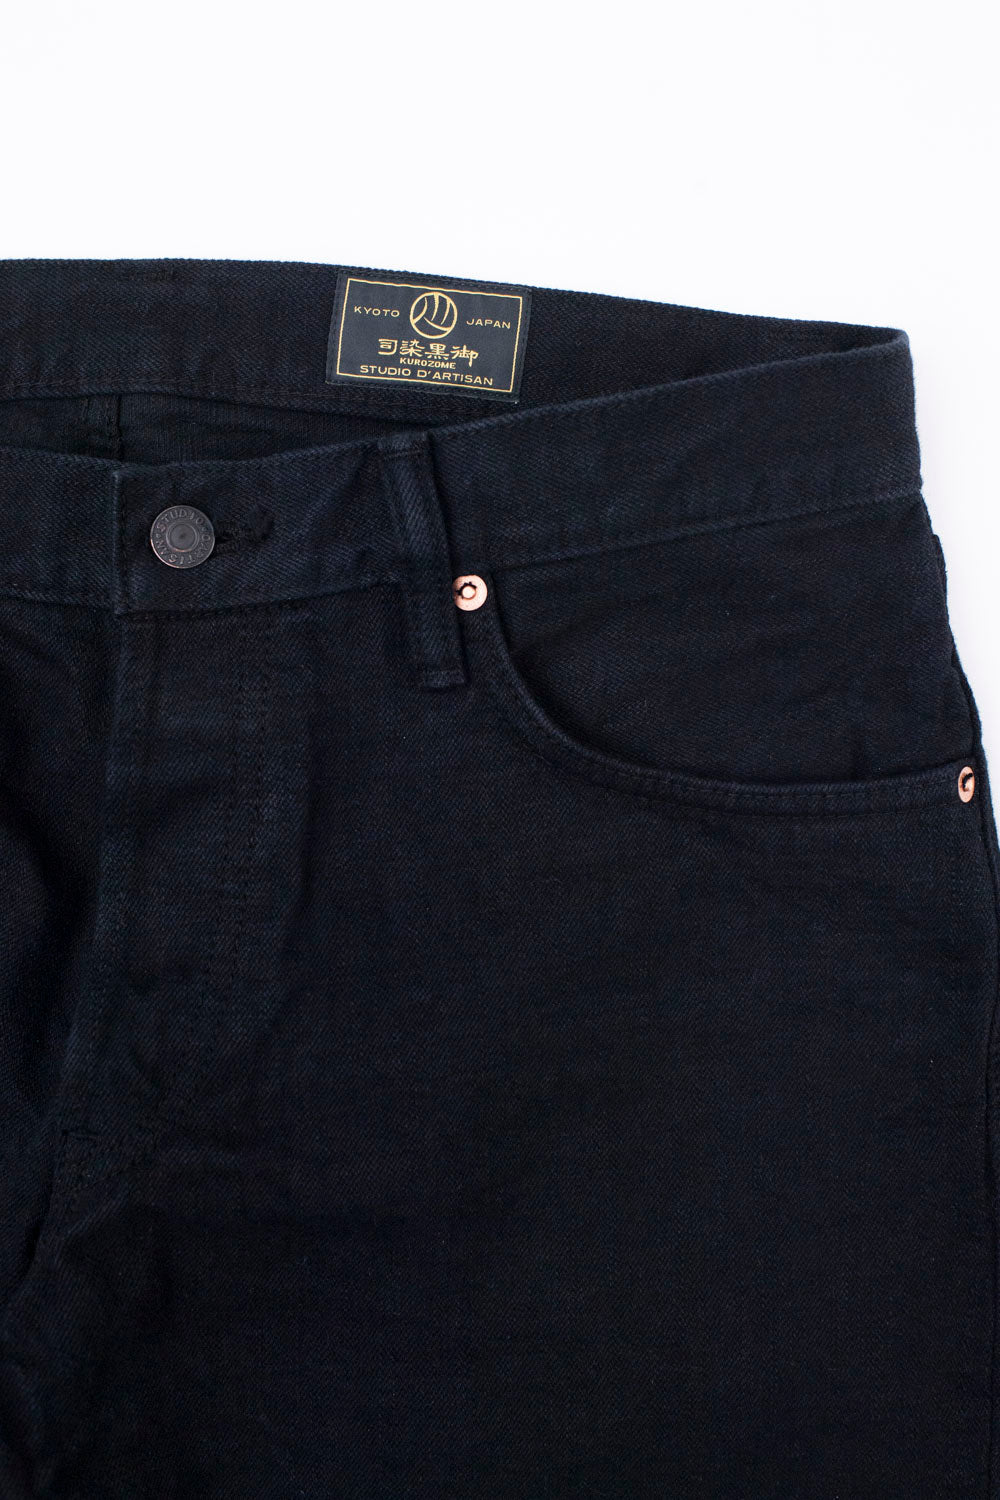 D&G Black Denim Wonder Fit Jeans S D&G